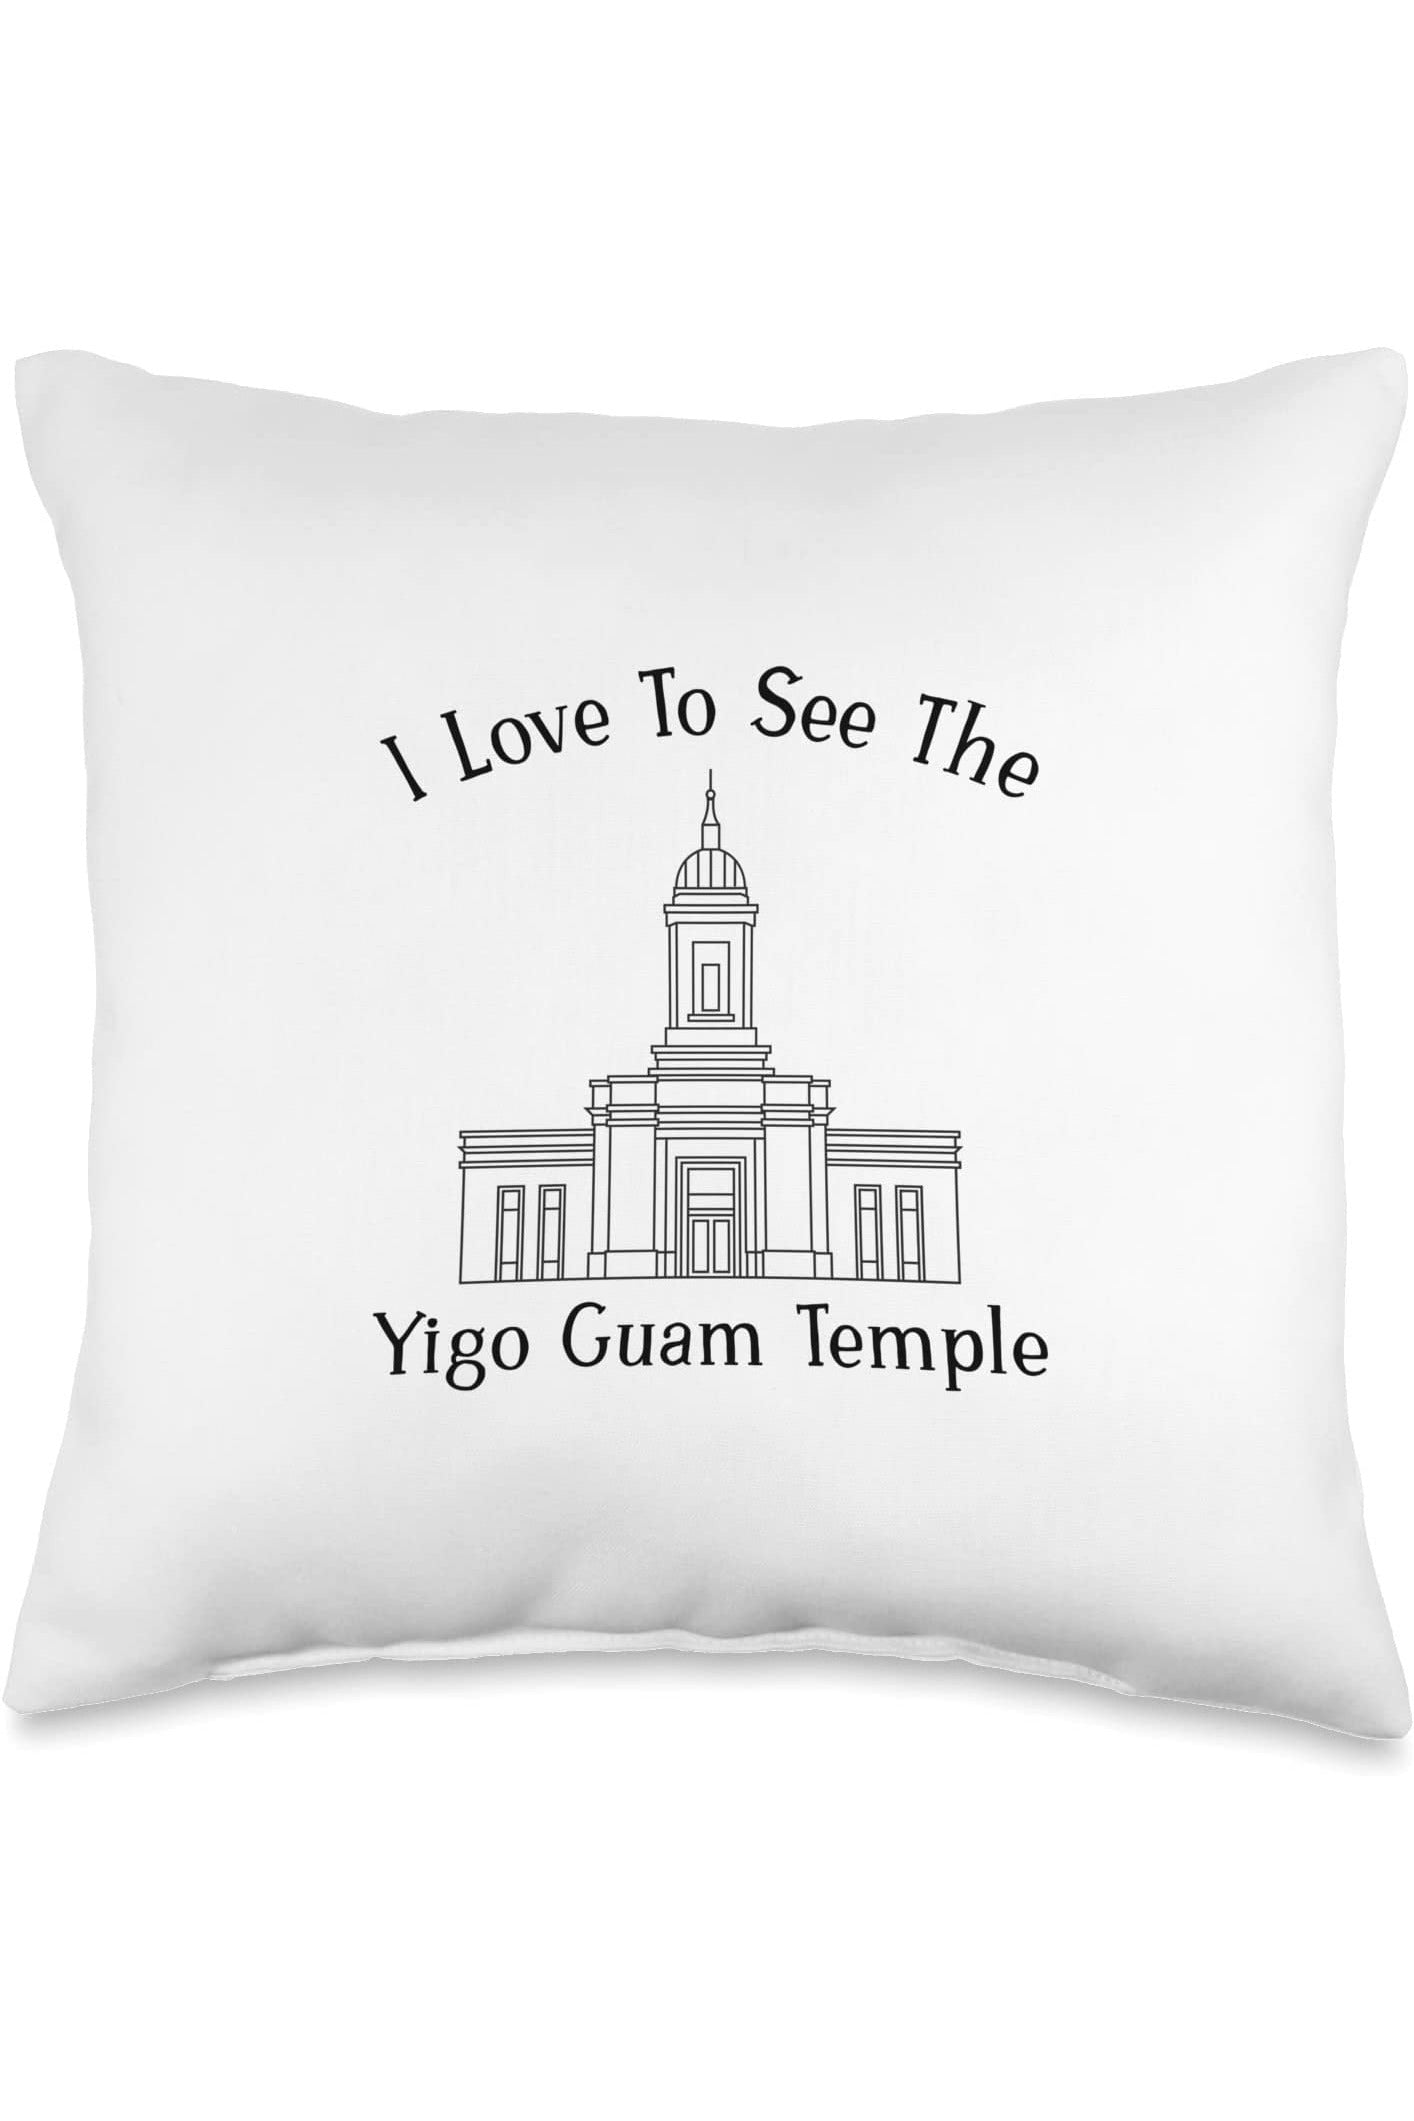 Yigo Guam Temple Throw Pillows - Happy Style (English) US